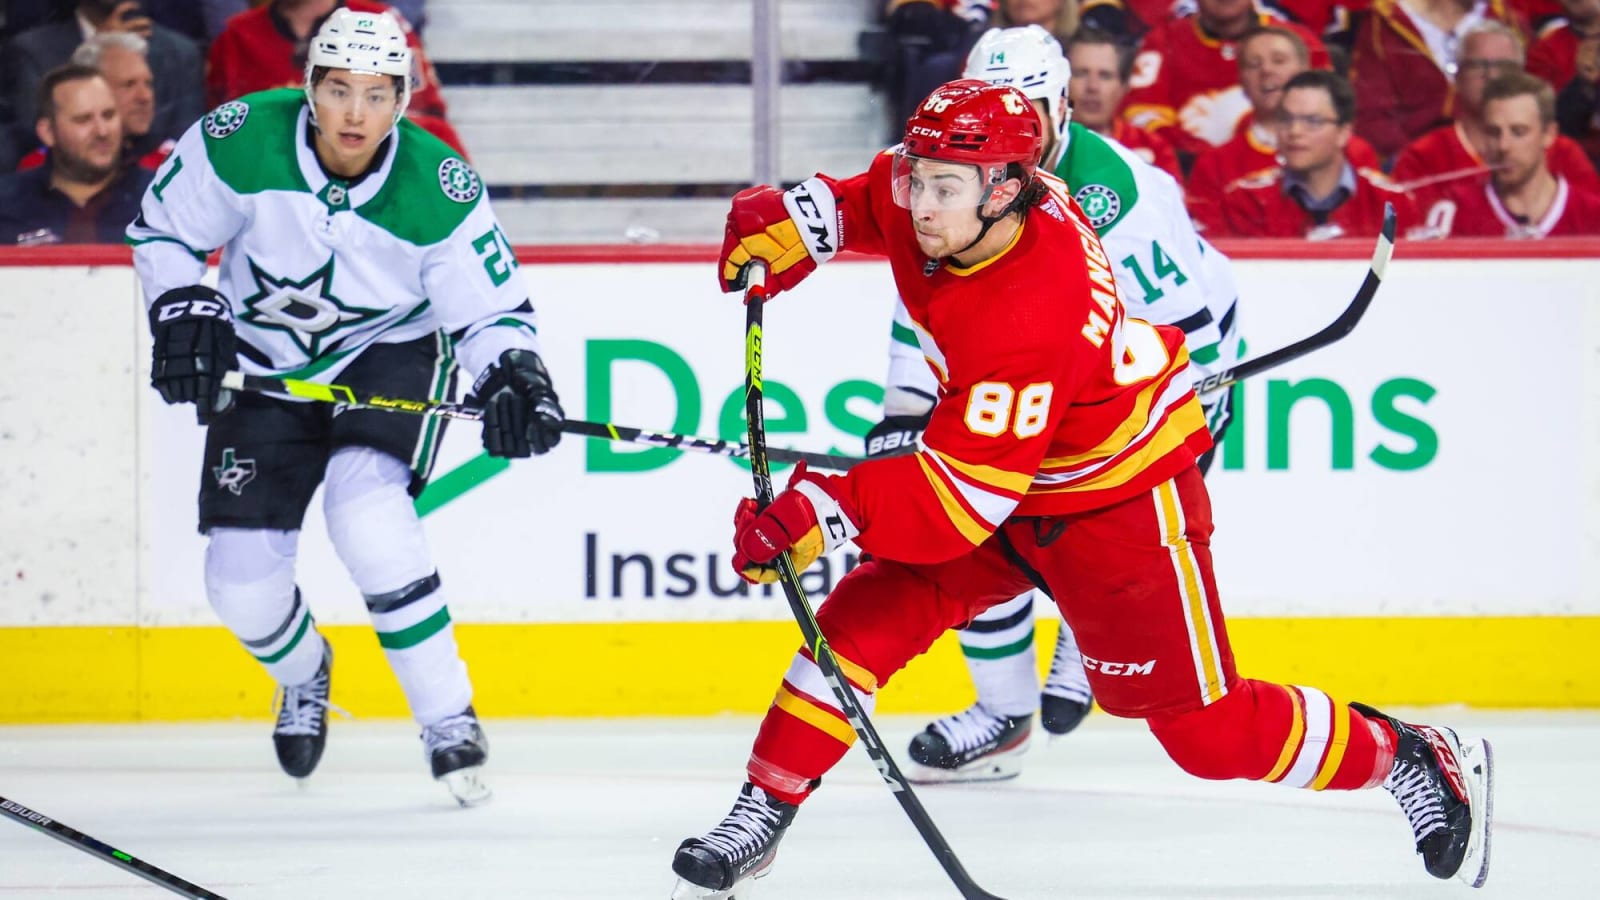 Calgary Flames forward Andrew Mangiapane reaches 300 NHL games played